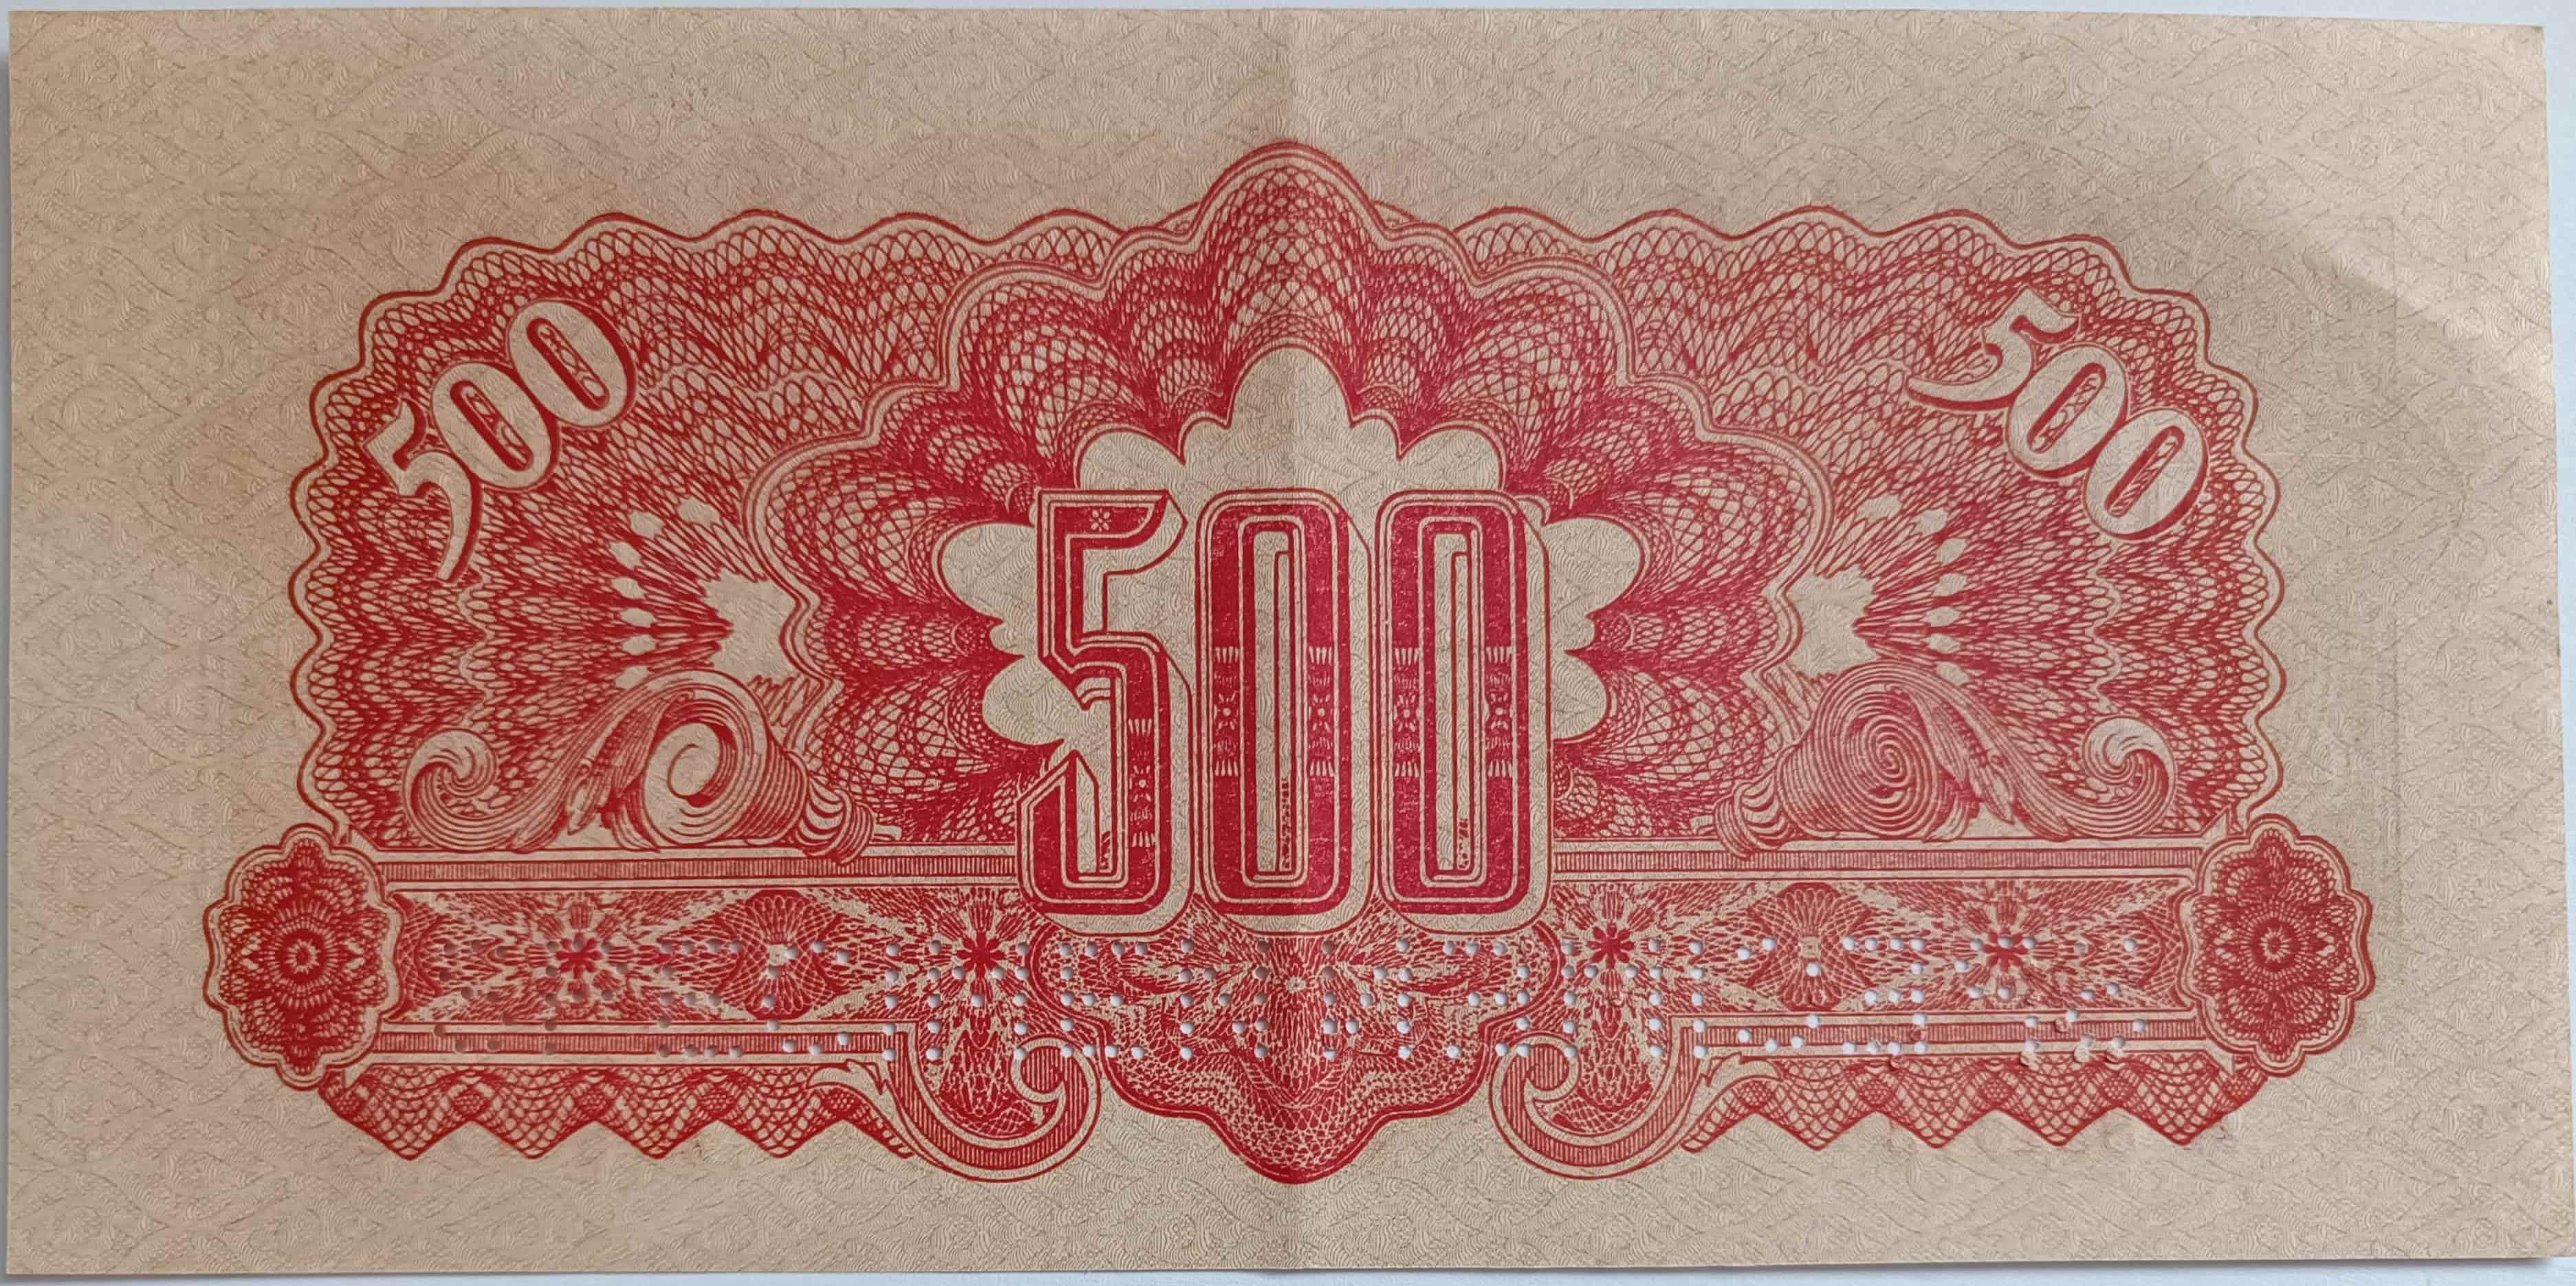 500 korún 1944 AB 